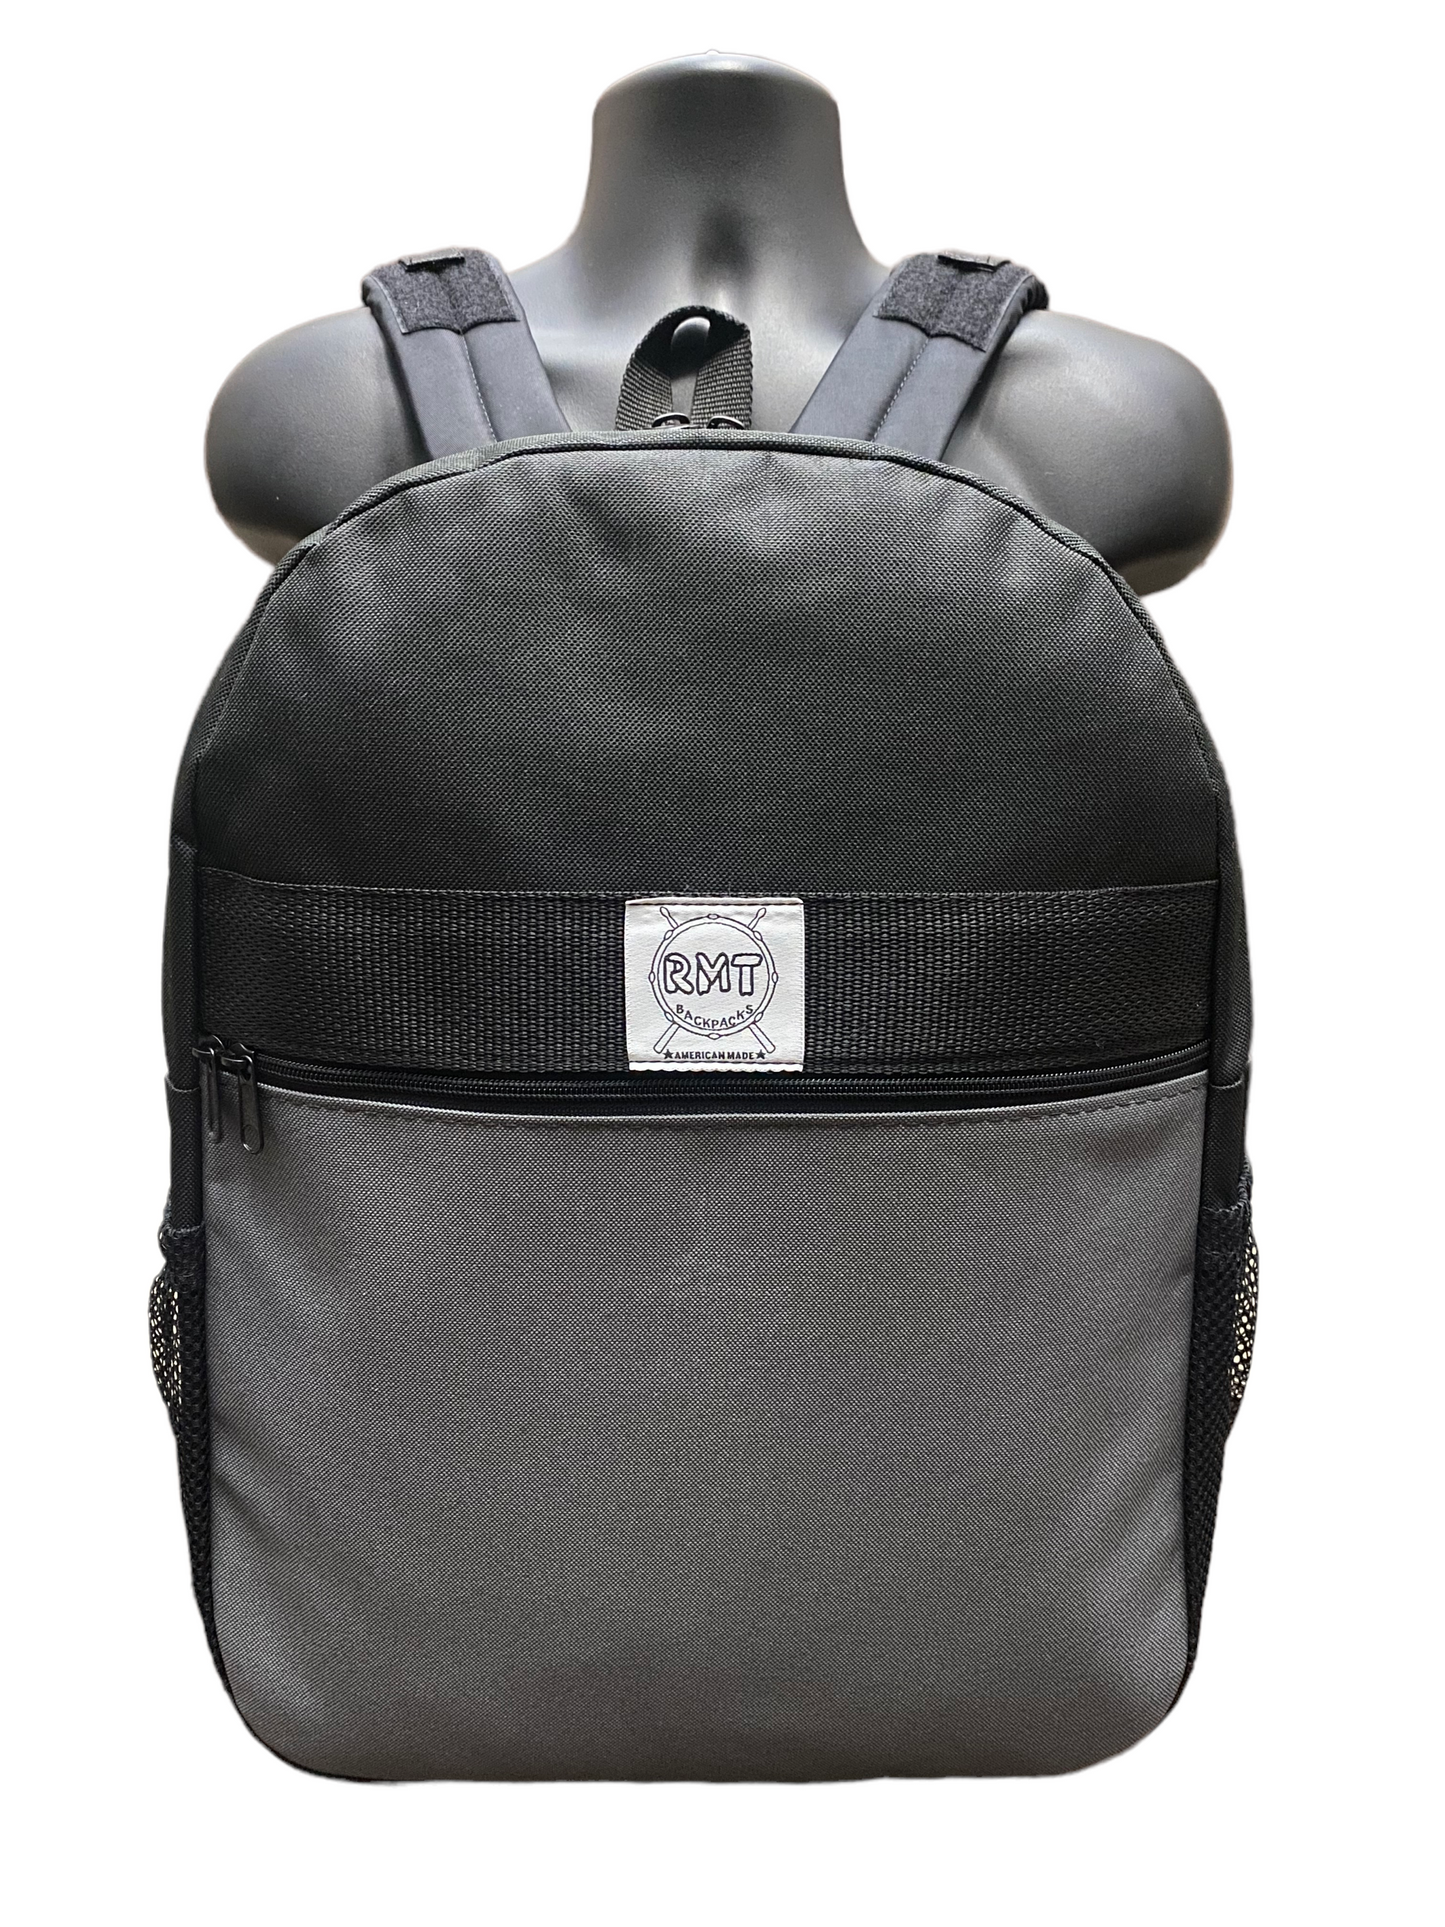 Safeguard V1 Backpack WITHOUT Ballistic Panels or Plates